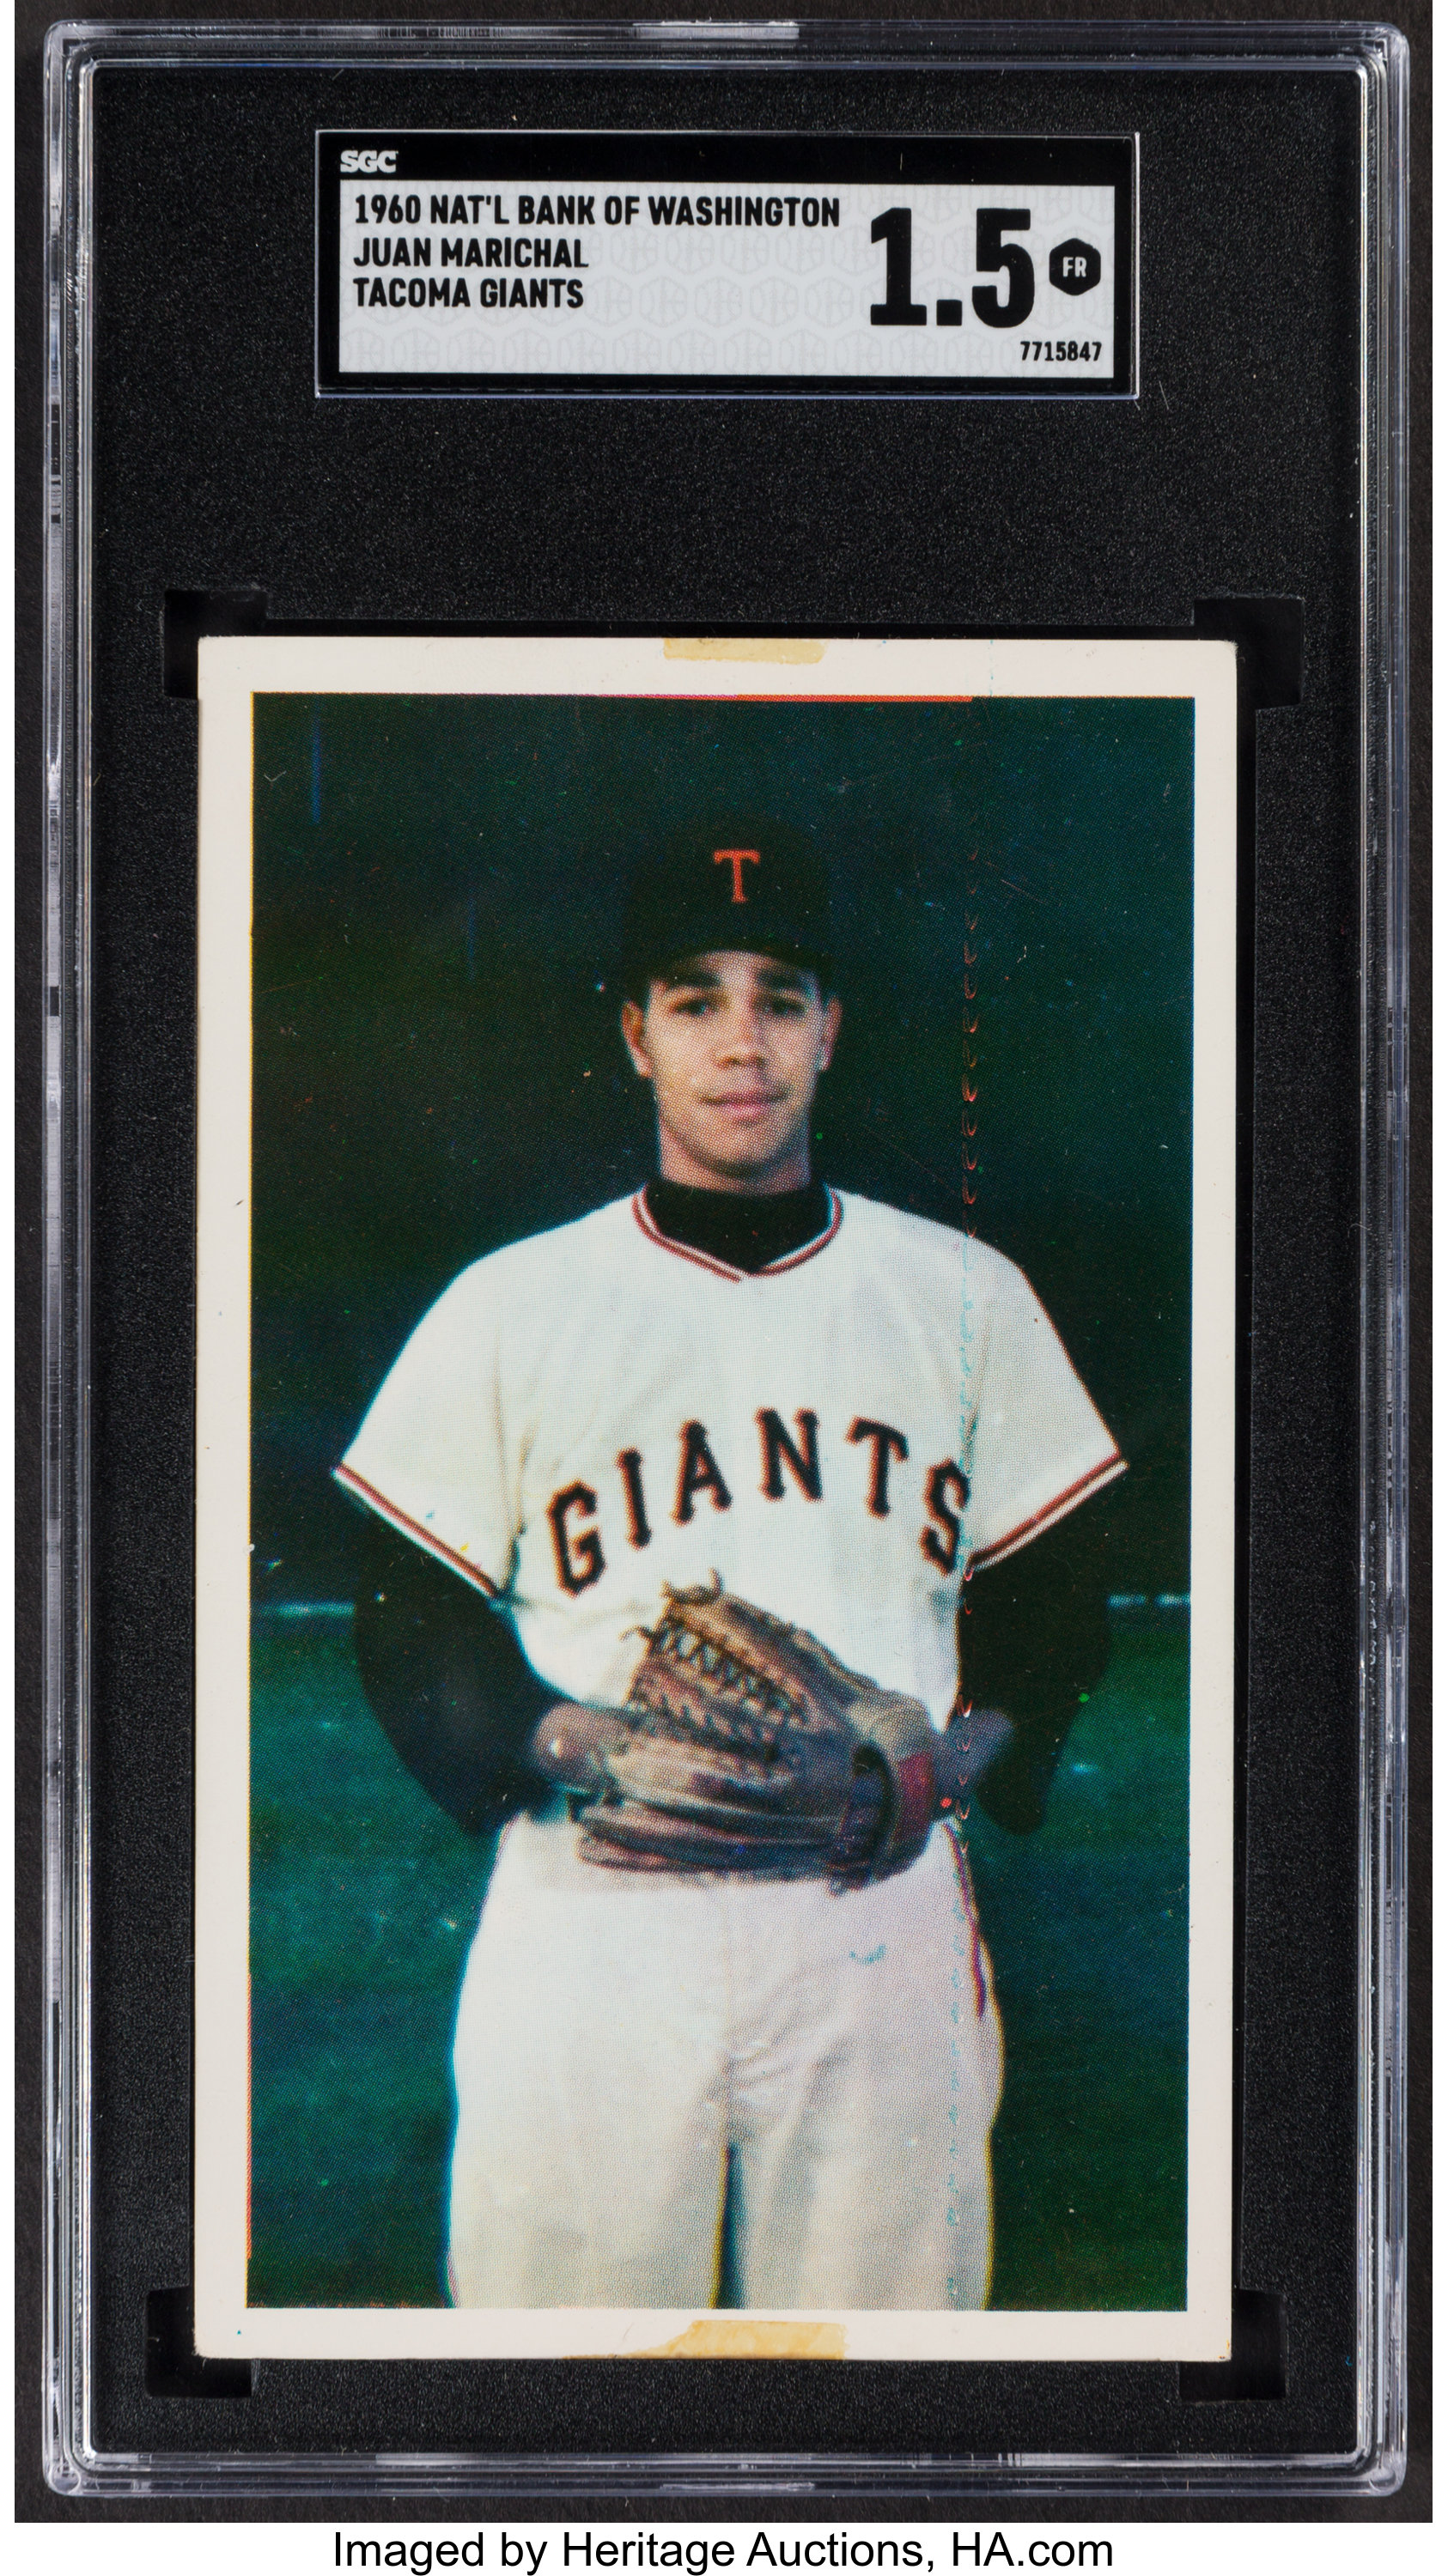 1965 Topps Juan Marichal San Francisco Giants Baseball Card #50